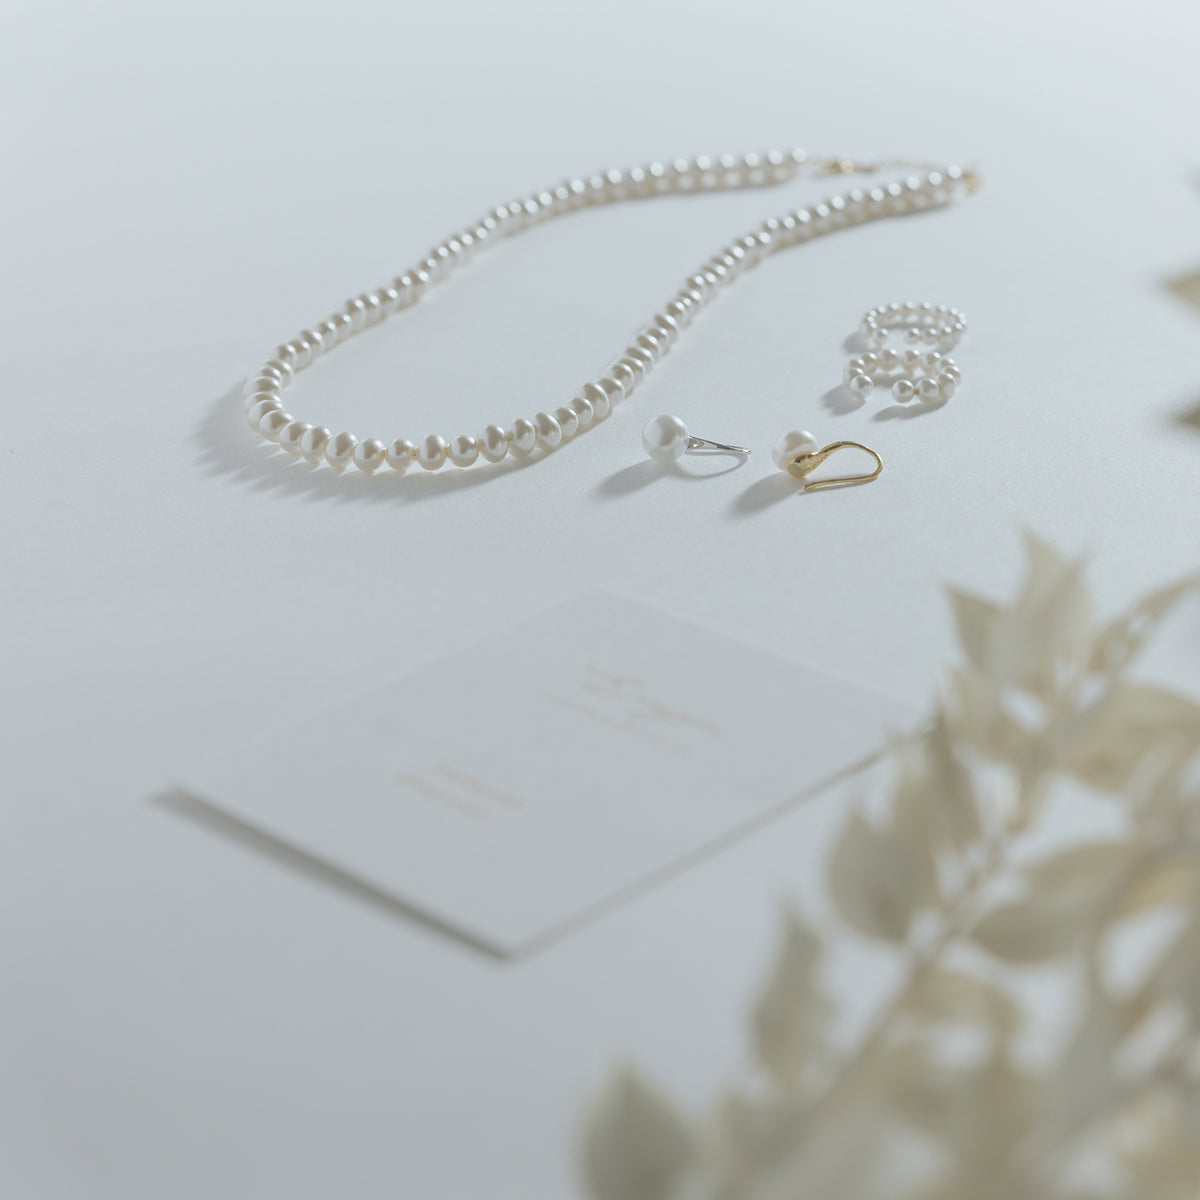 Artificial Pearl Plain Necklace